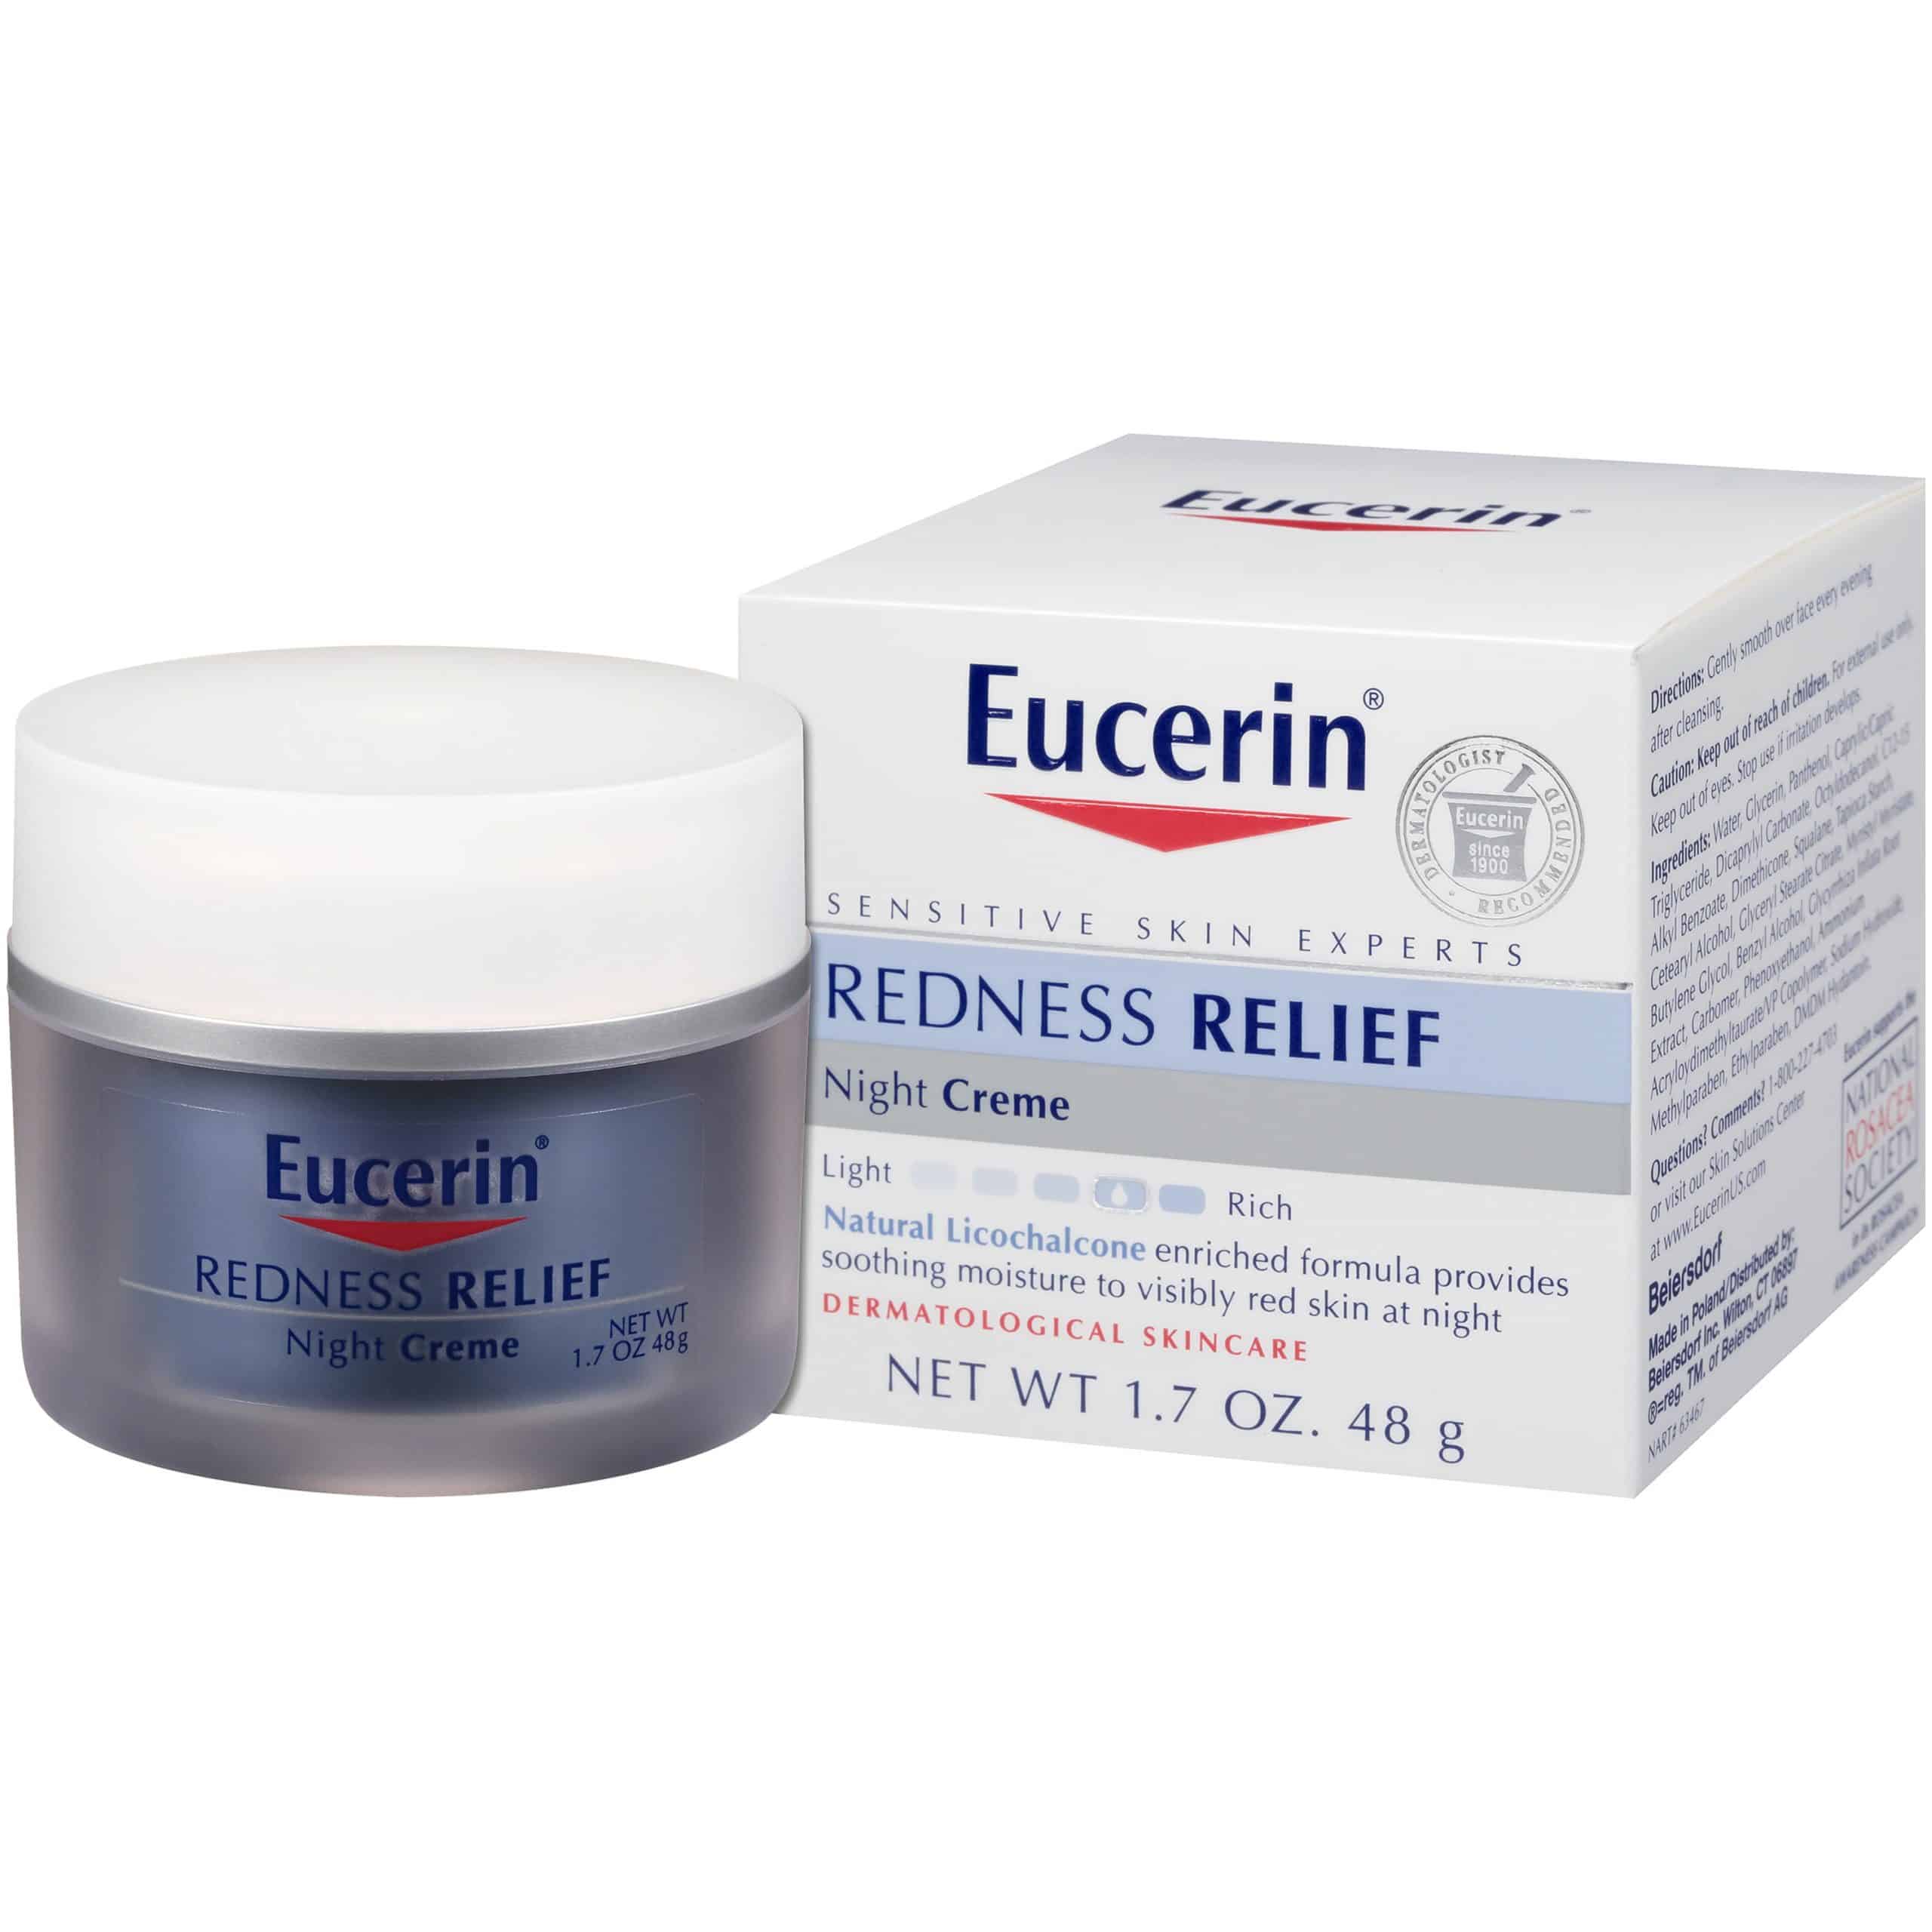 Eucerin Redness Relief Night Creme, For Sensitive Skin, 1.7 Oz. Jar ...